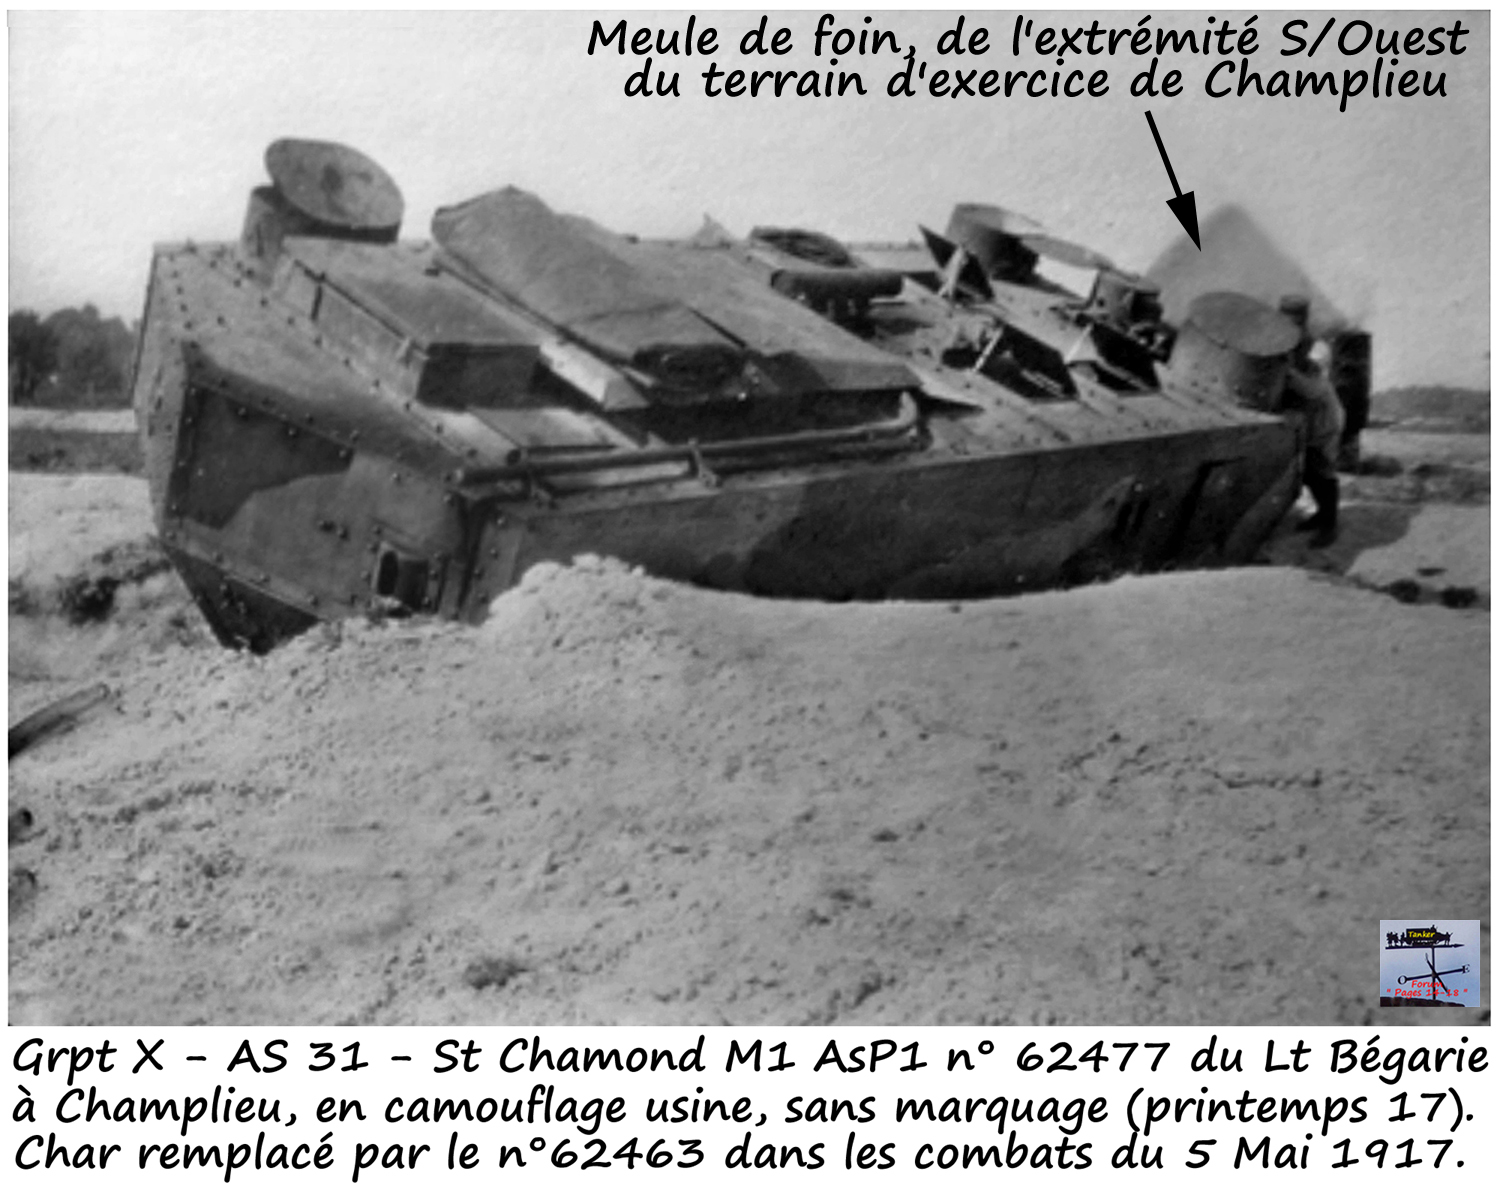 Grpt X - AS 31 - St Chamond M1 n° 62477 Teddy 1 (07a).jpg